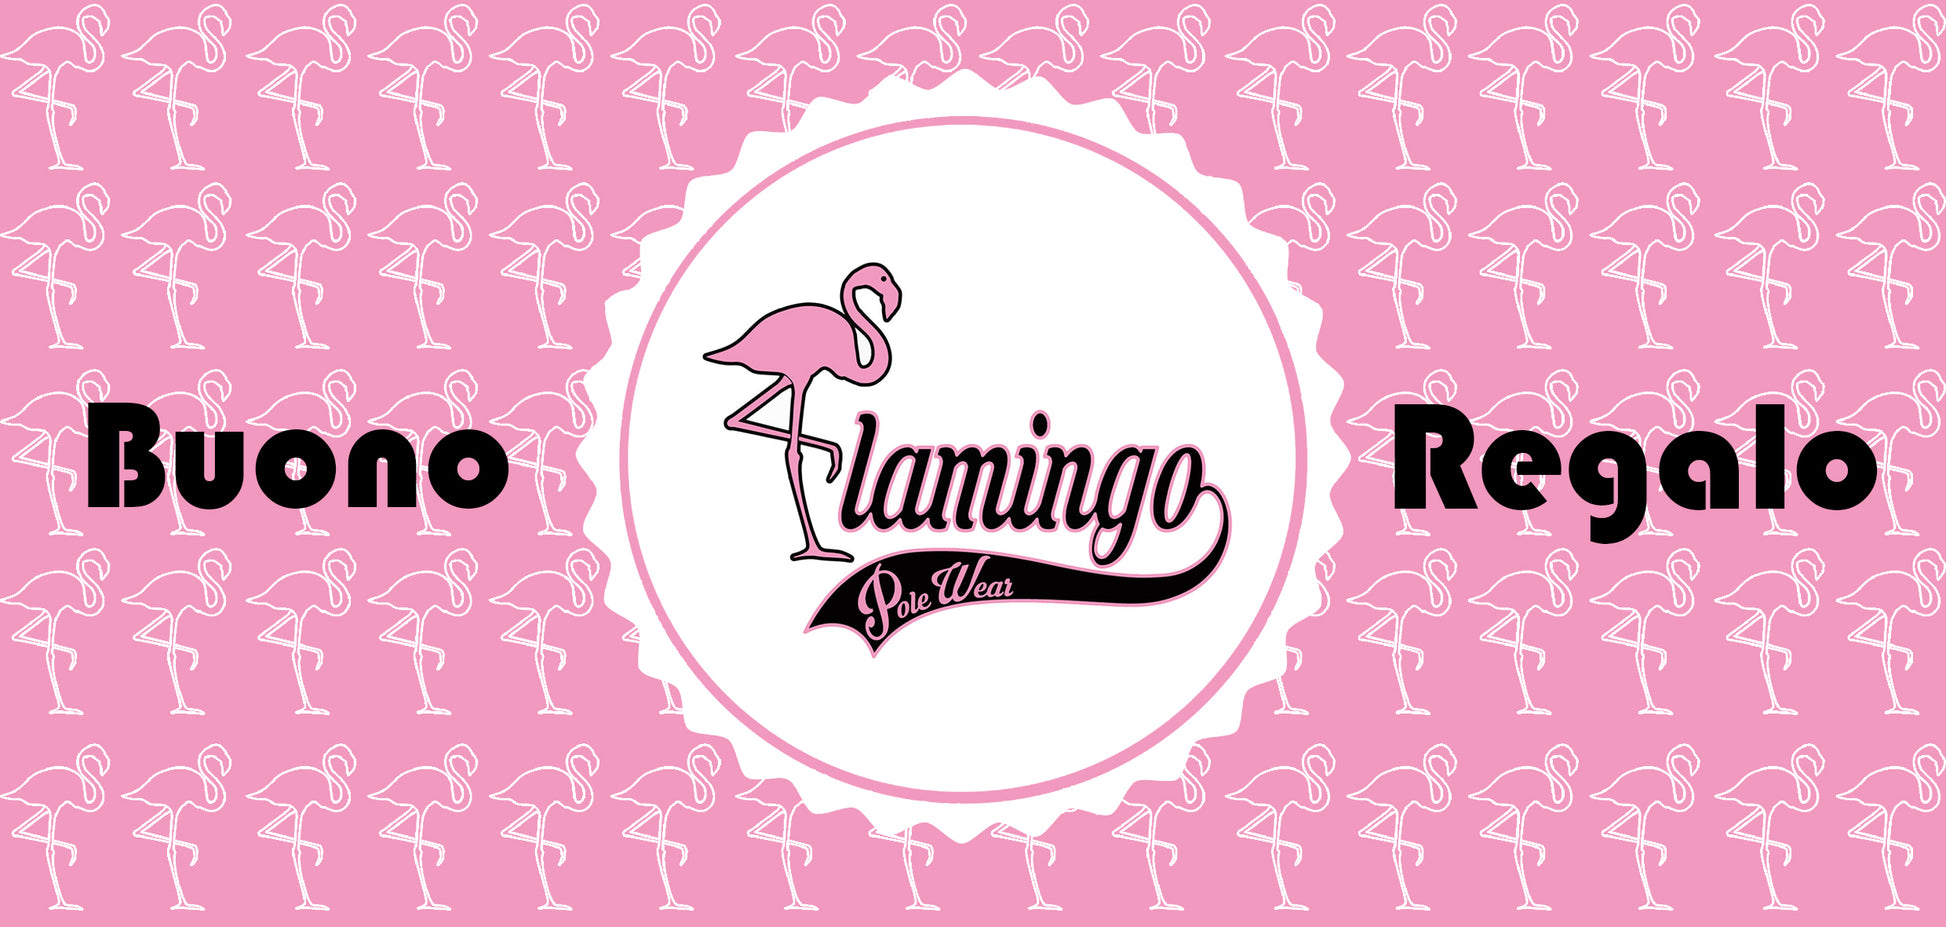 Buono regalo Flamingo pole wear - Flamingo pole wear